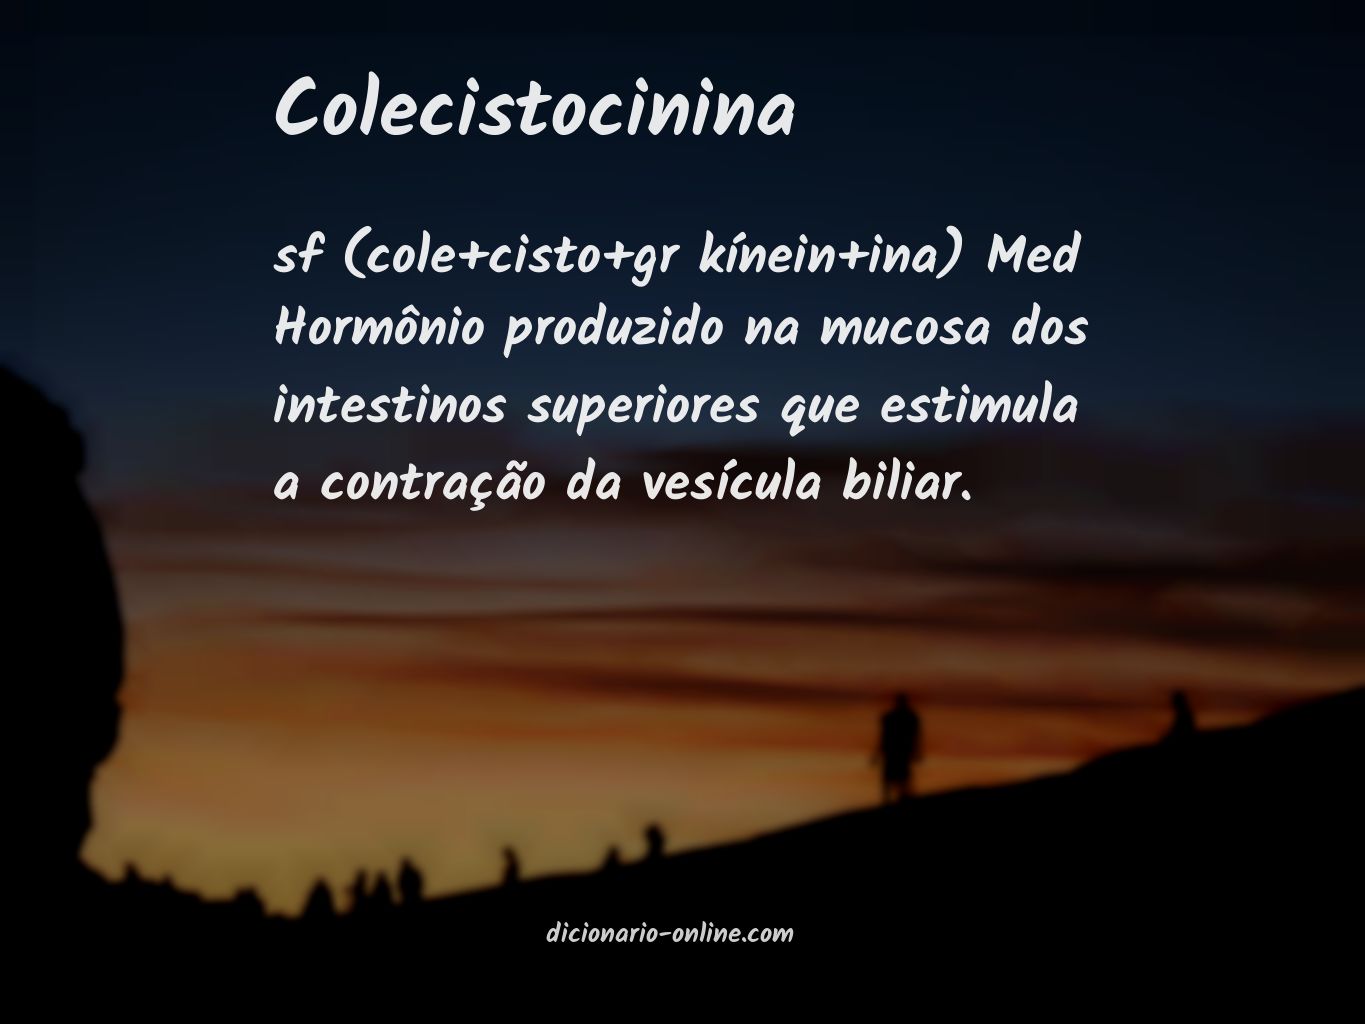 Significado de colecistocinina